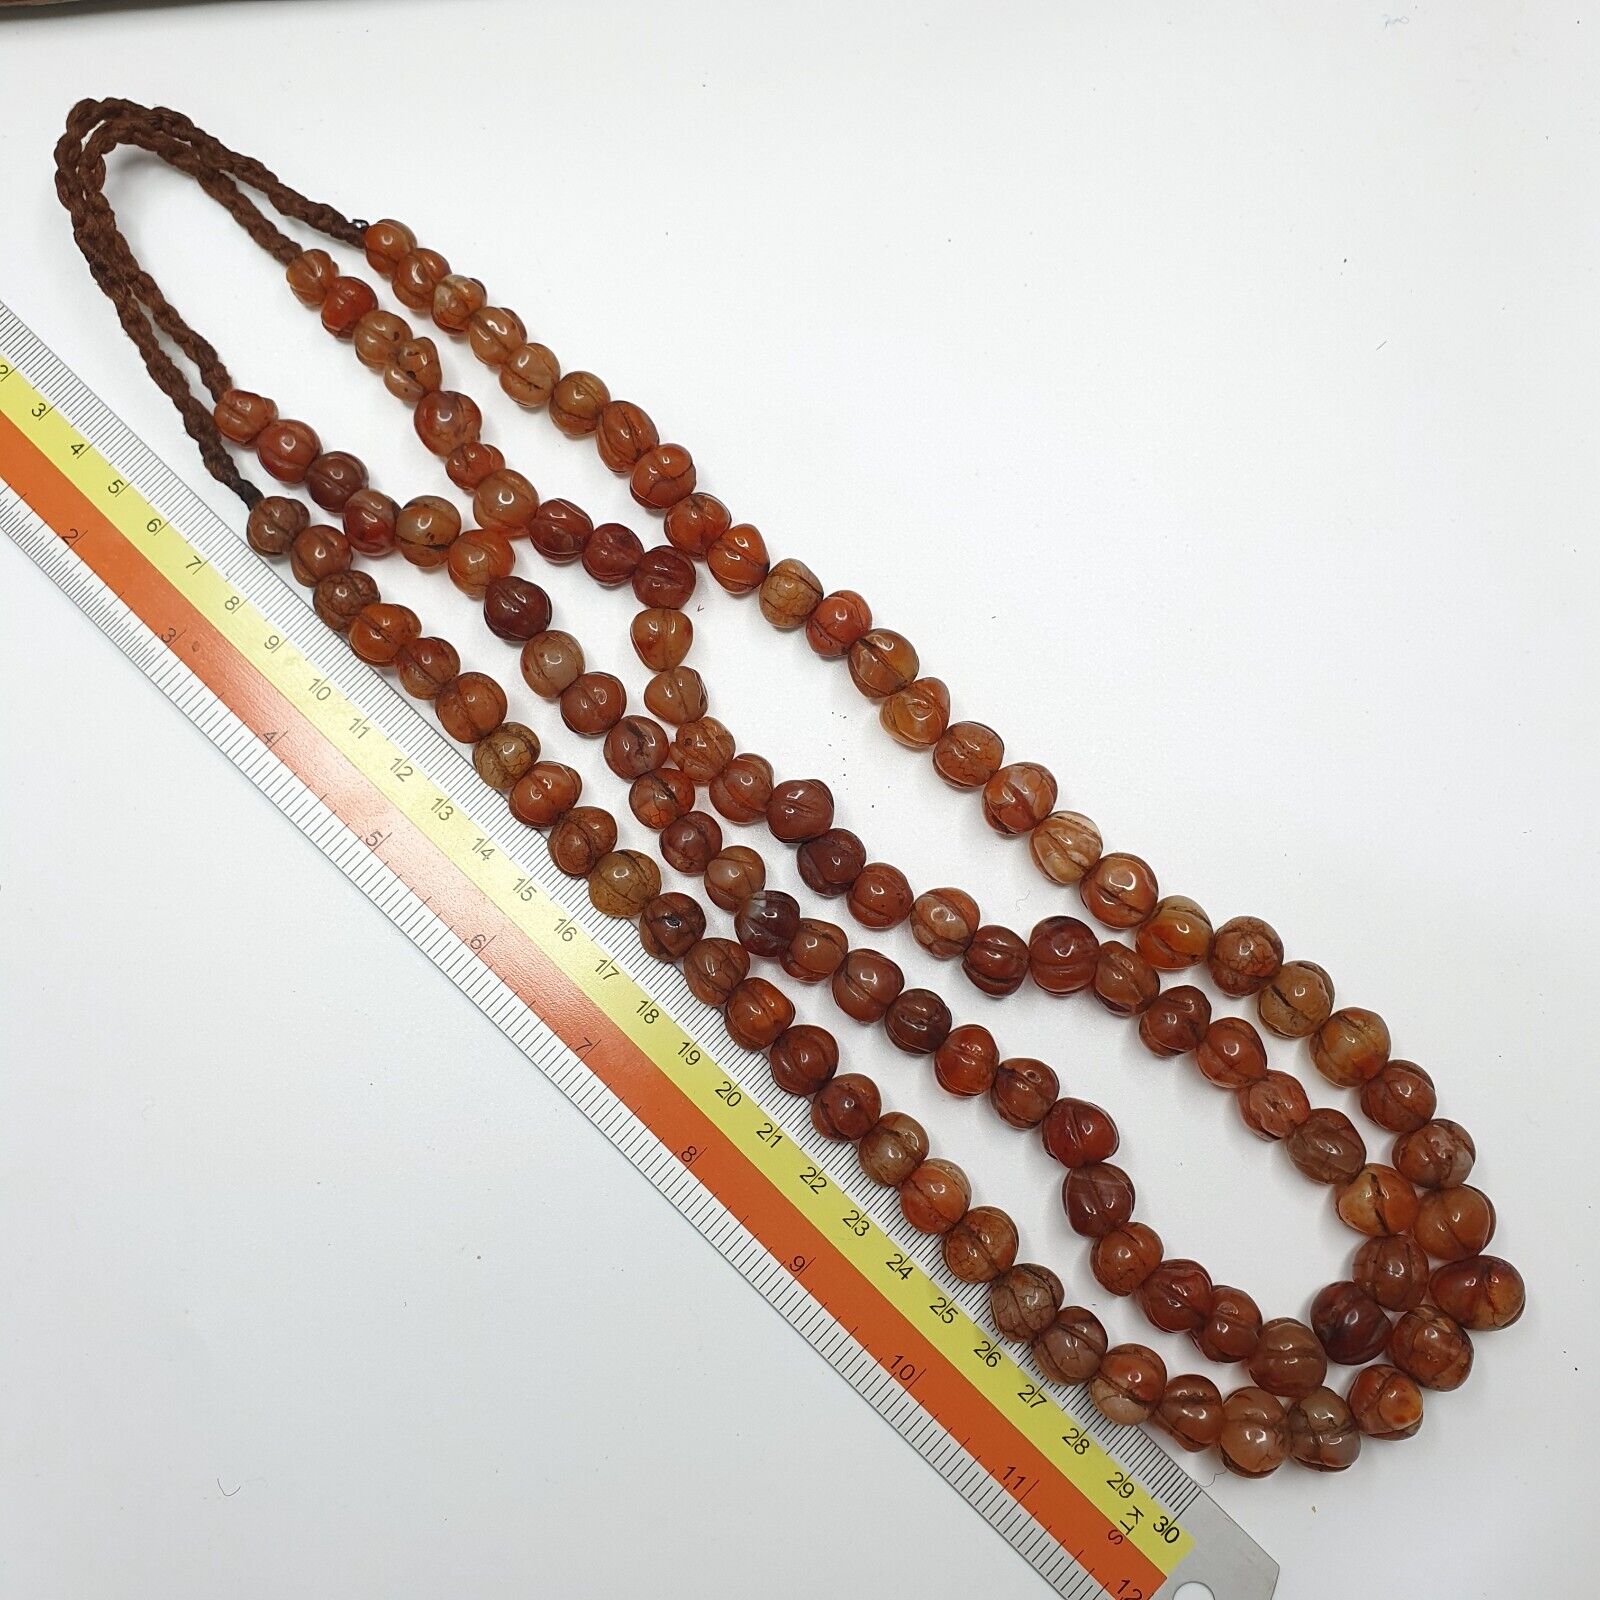 2 Vintage Himalayan Tibetan Carnelian Agate Melon Shape Beads Necklaces #12